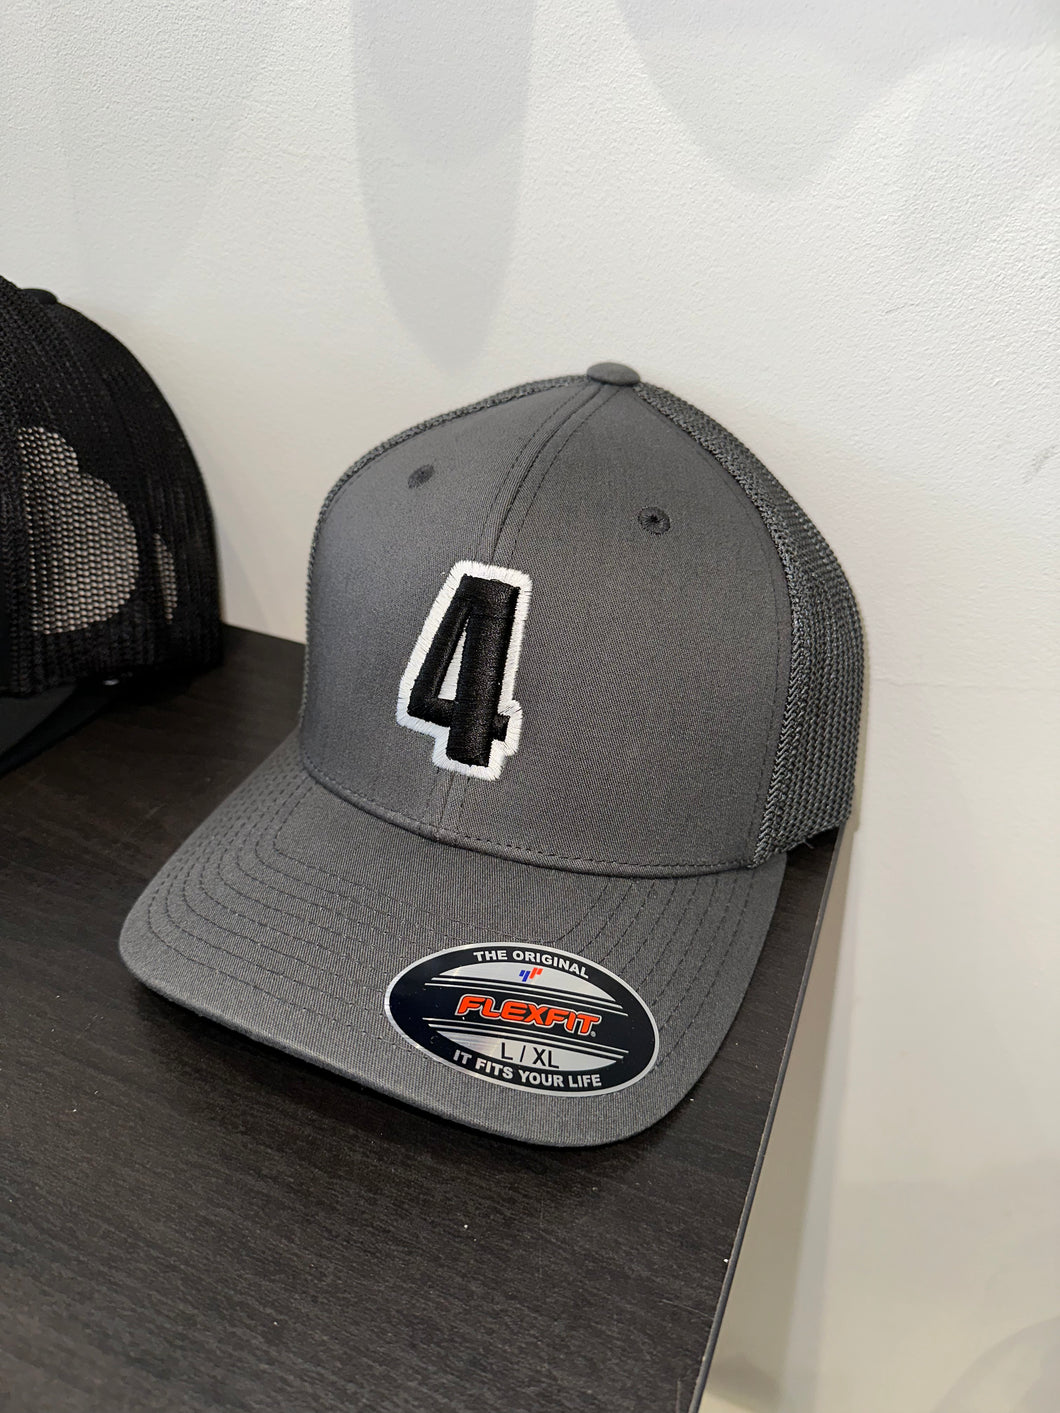 Grey original flexfit cap with black & white logo